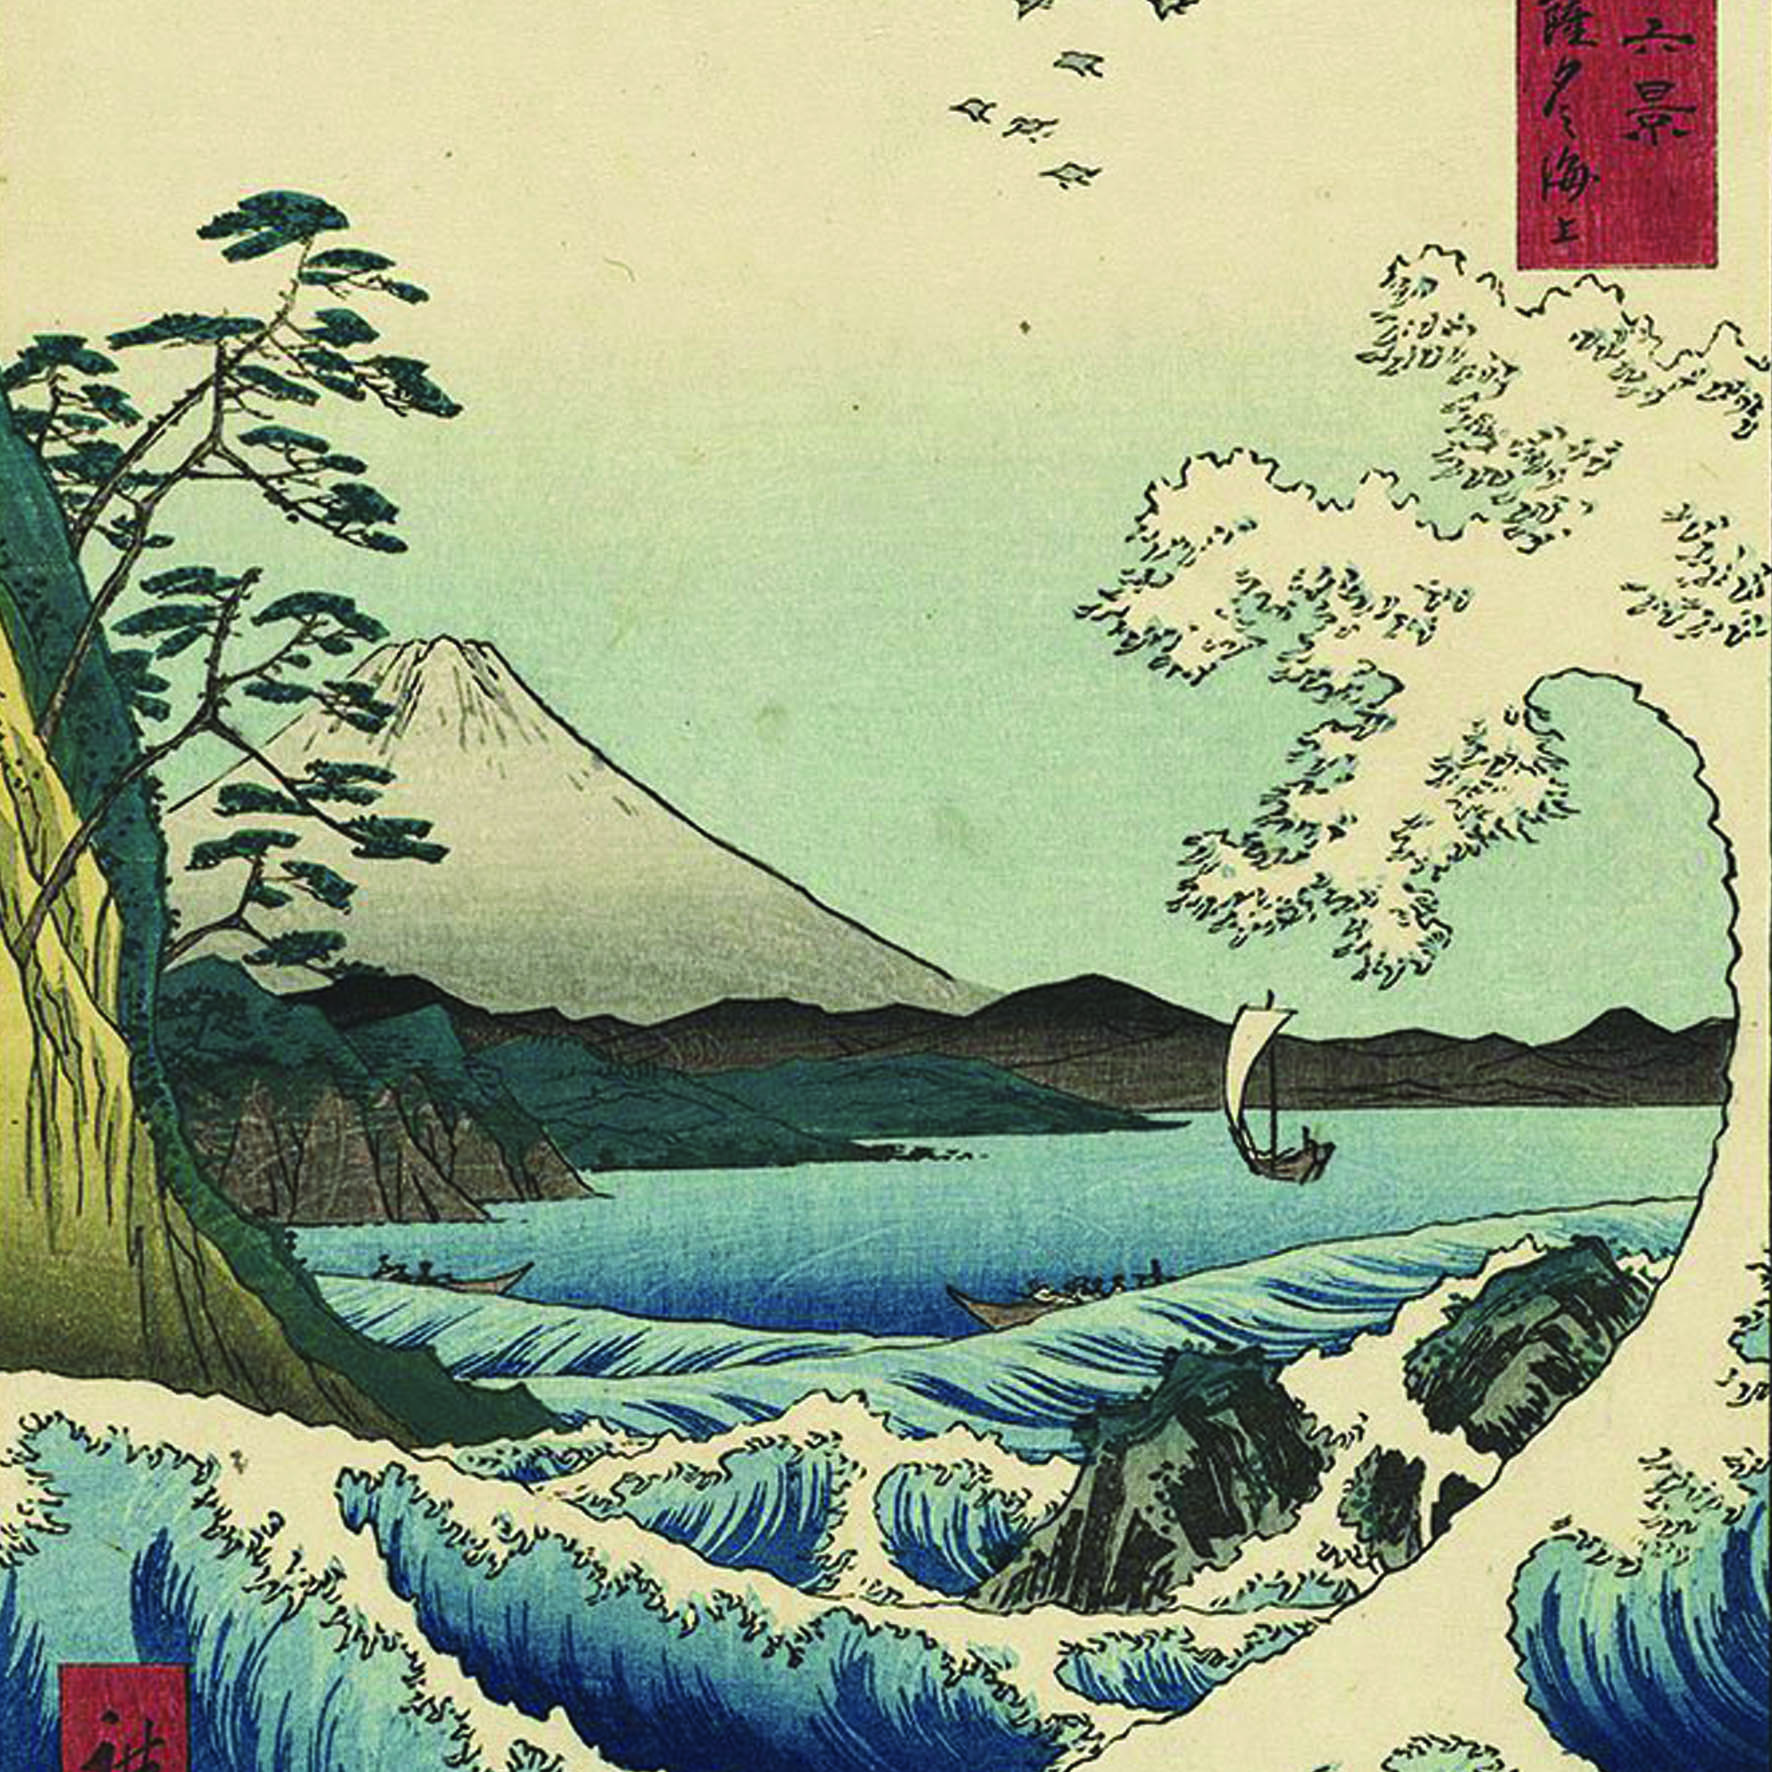 Hiroshige. Visions from Japan